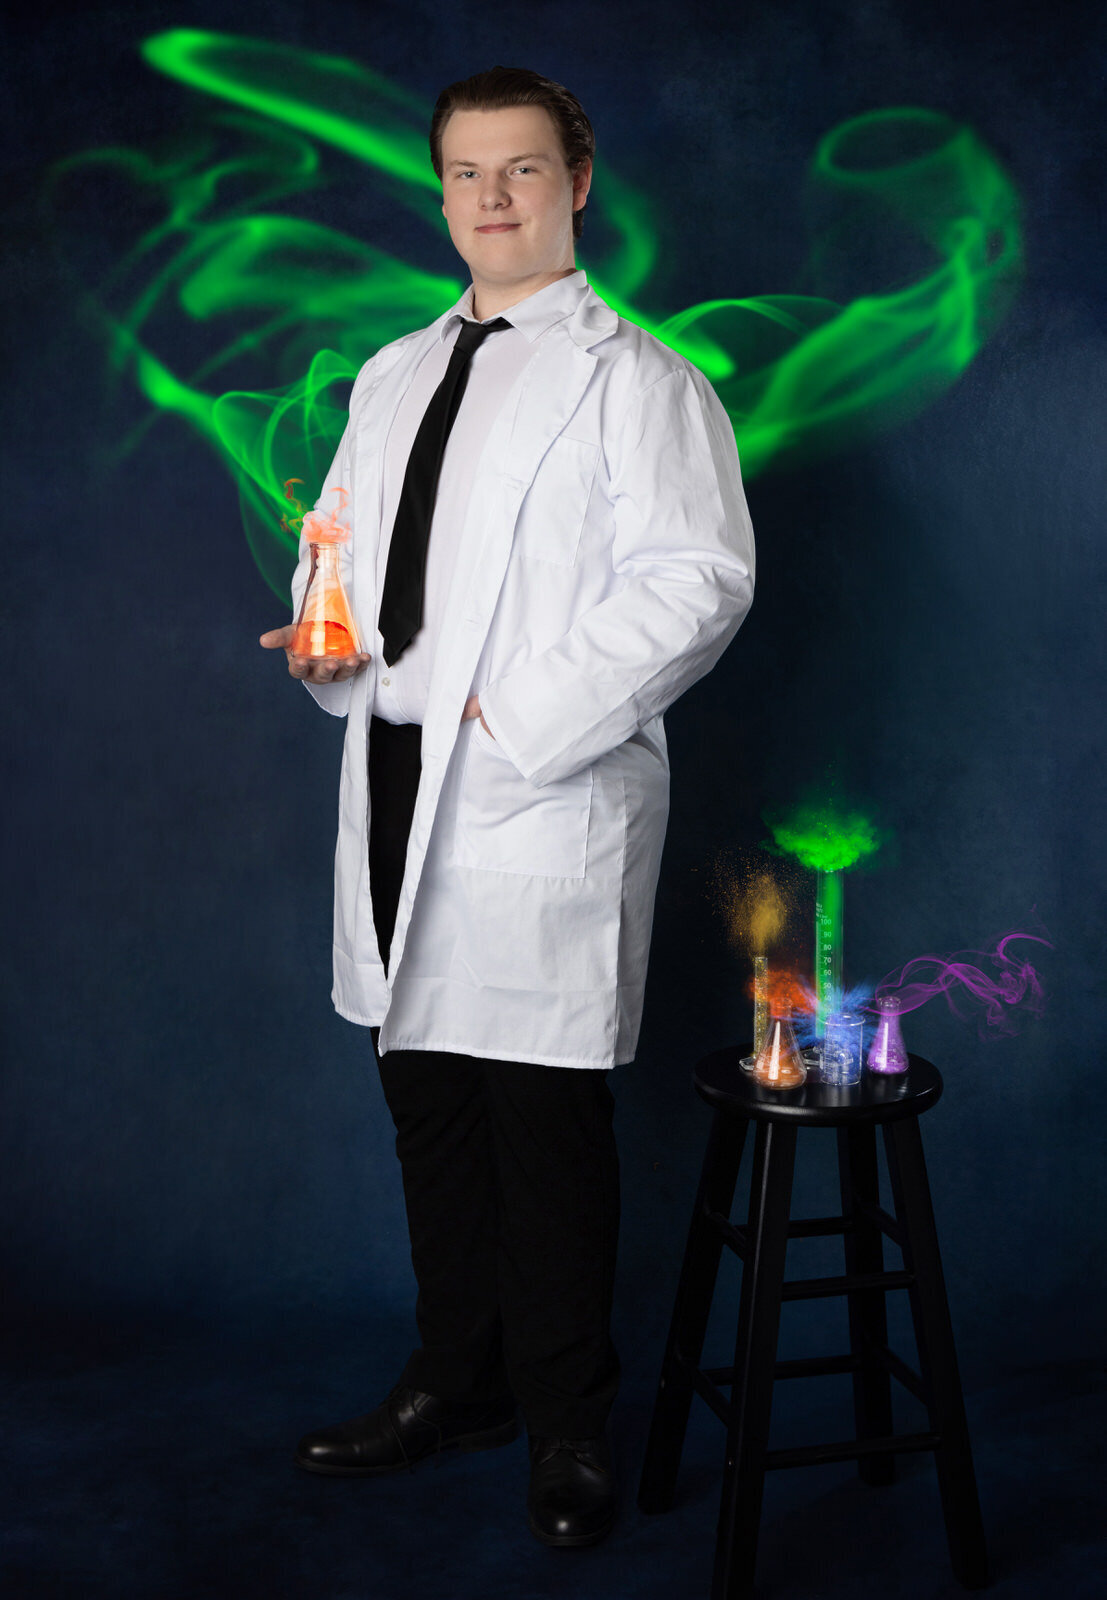 senior-boy-in-lab-coat-with-beakers-of-smoke